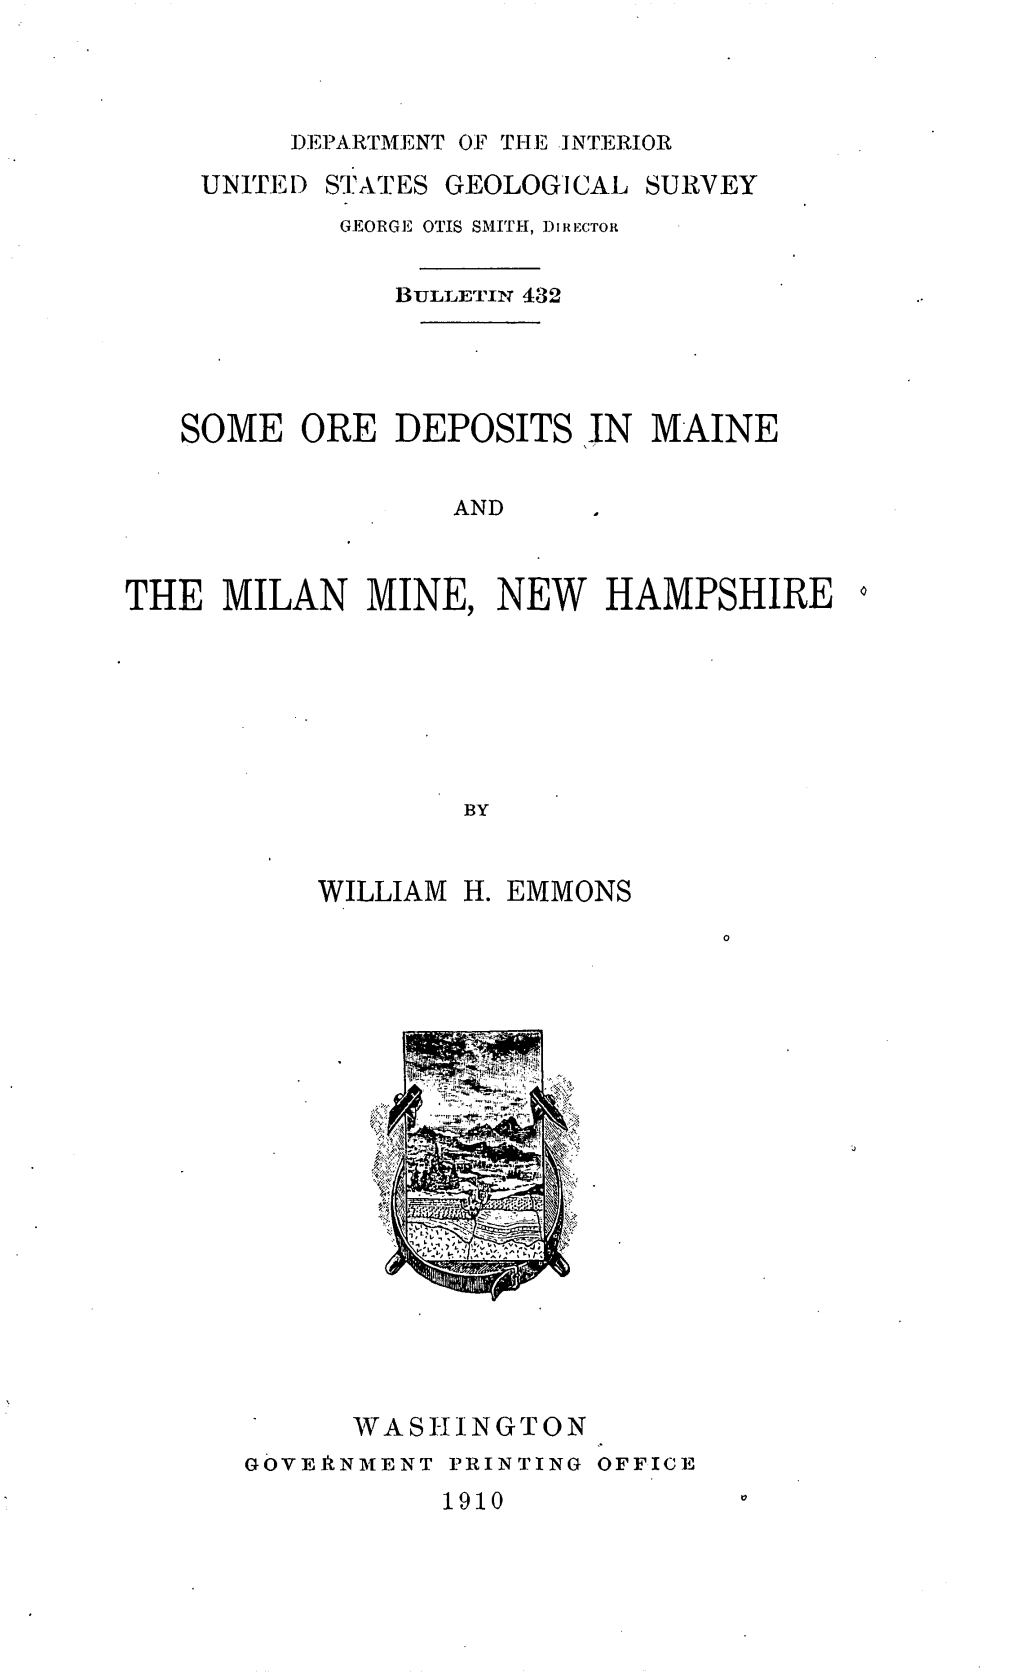 The Milan Mine, New Hampshire